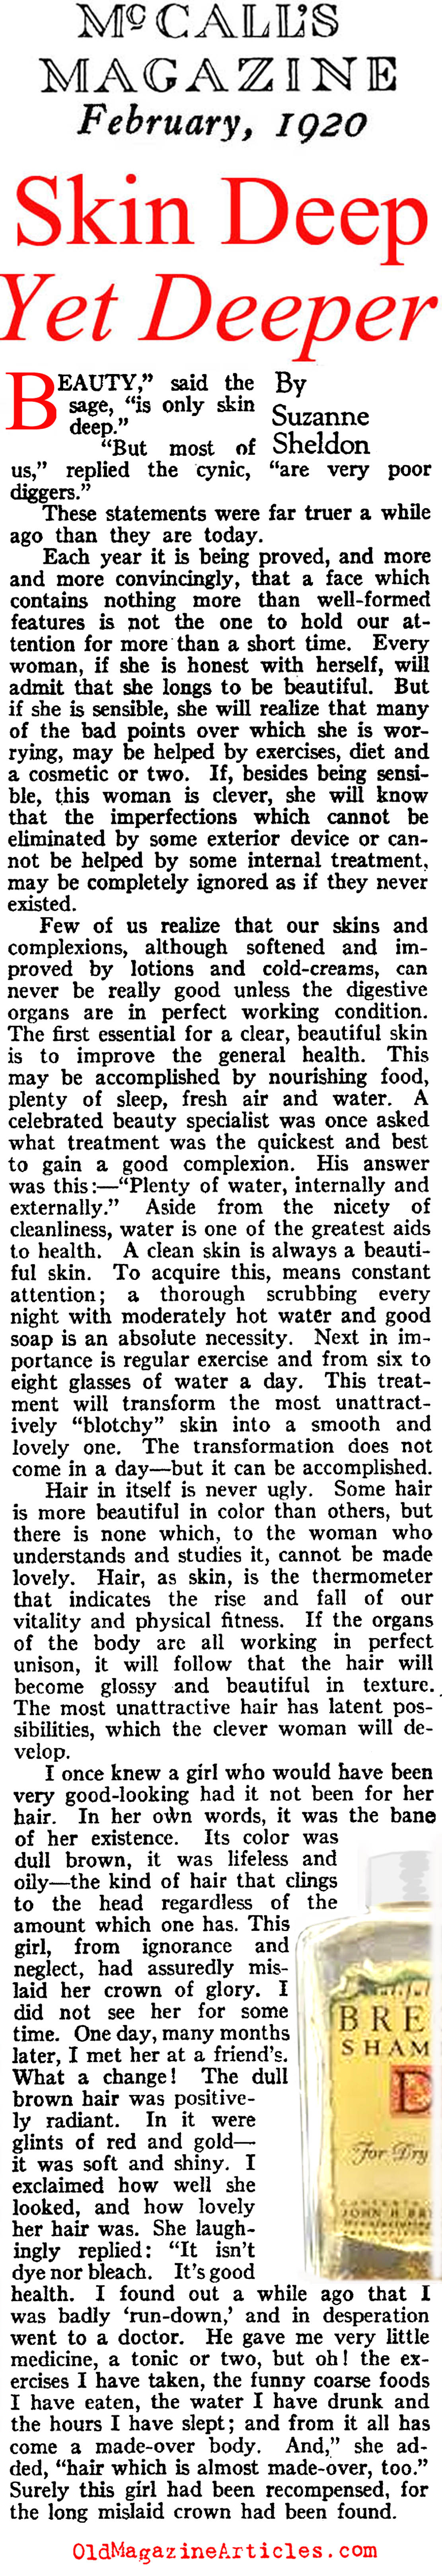 Timeless Advice Regarding Skin Care (McCall's Magazine, 1920)